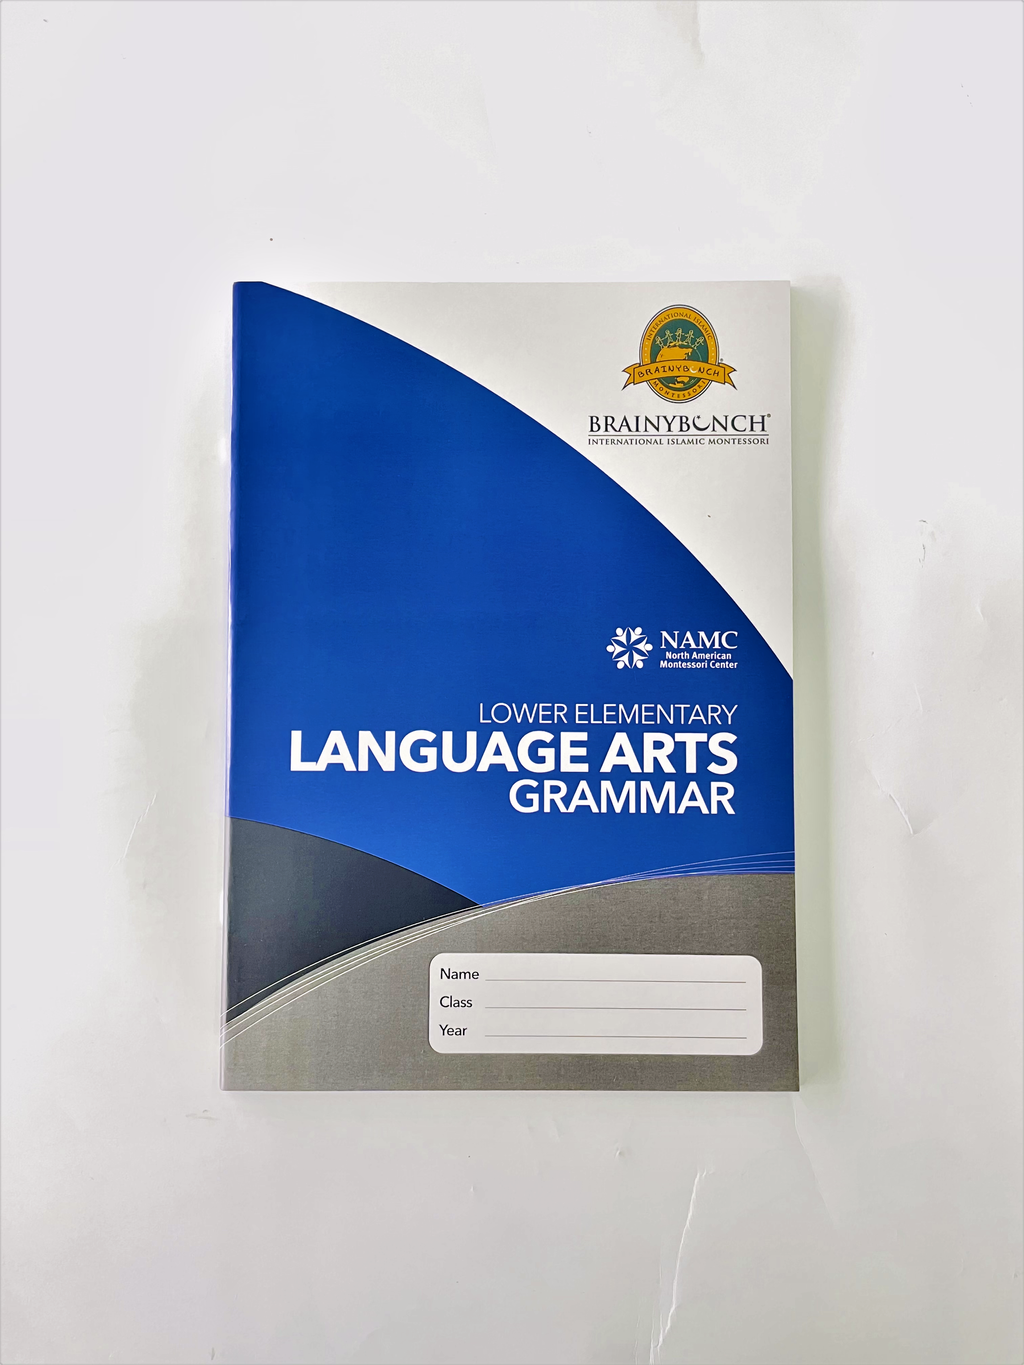 LanguageArtGrammar